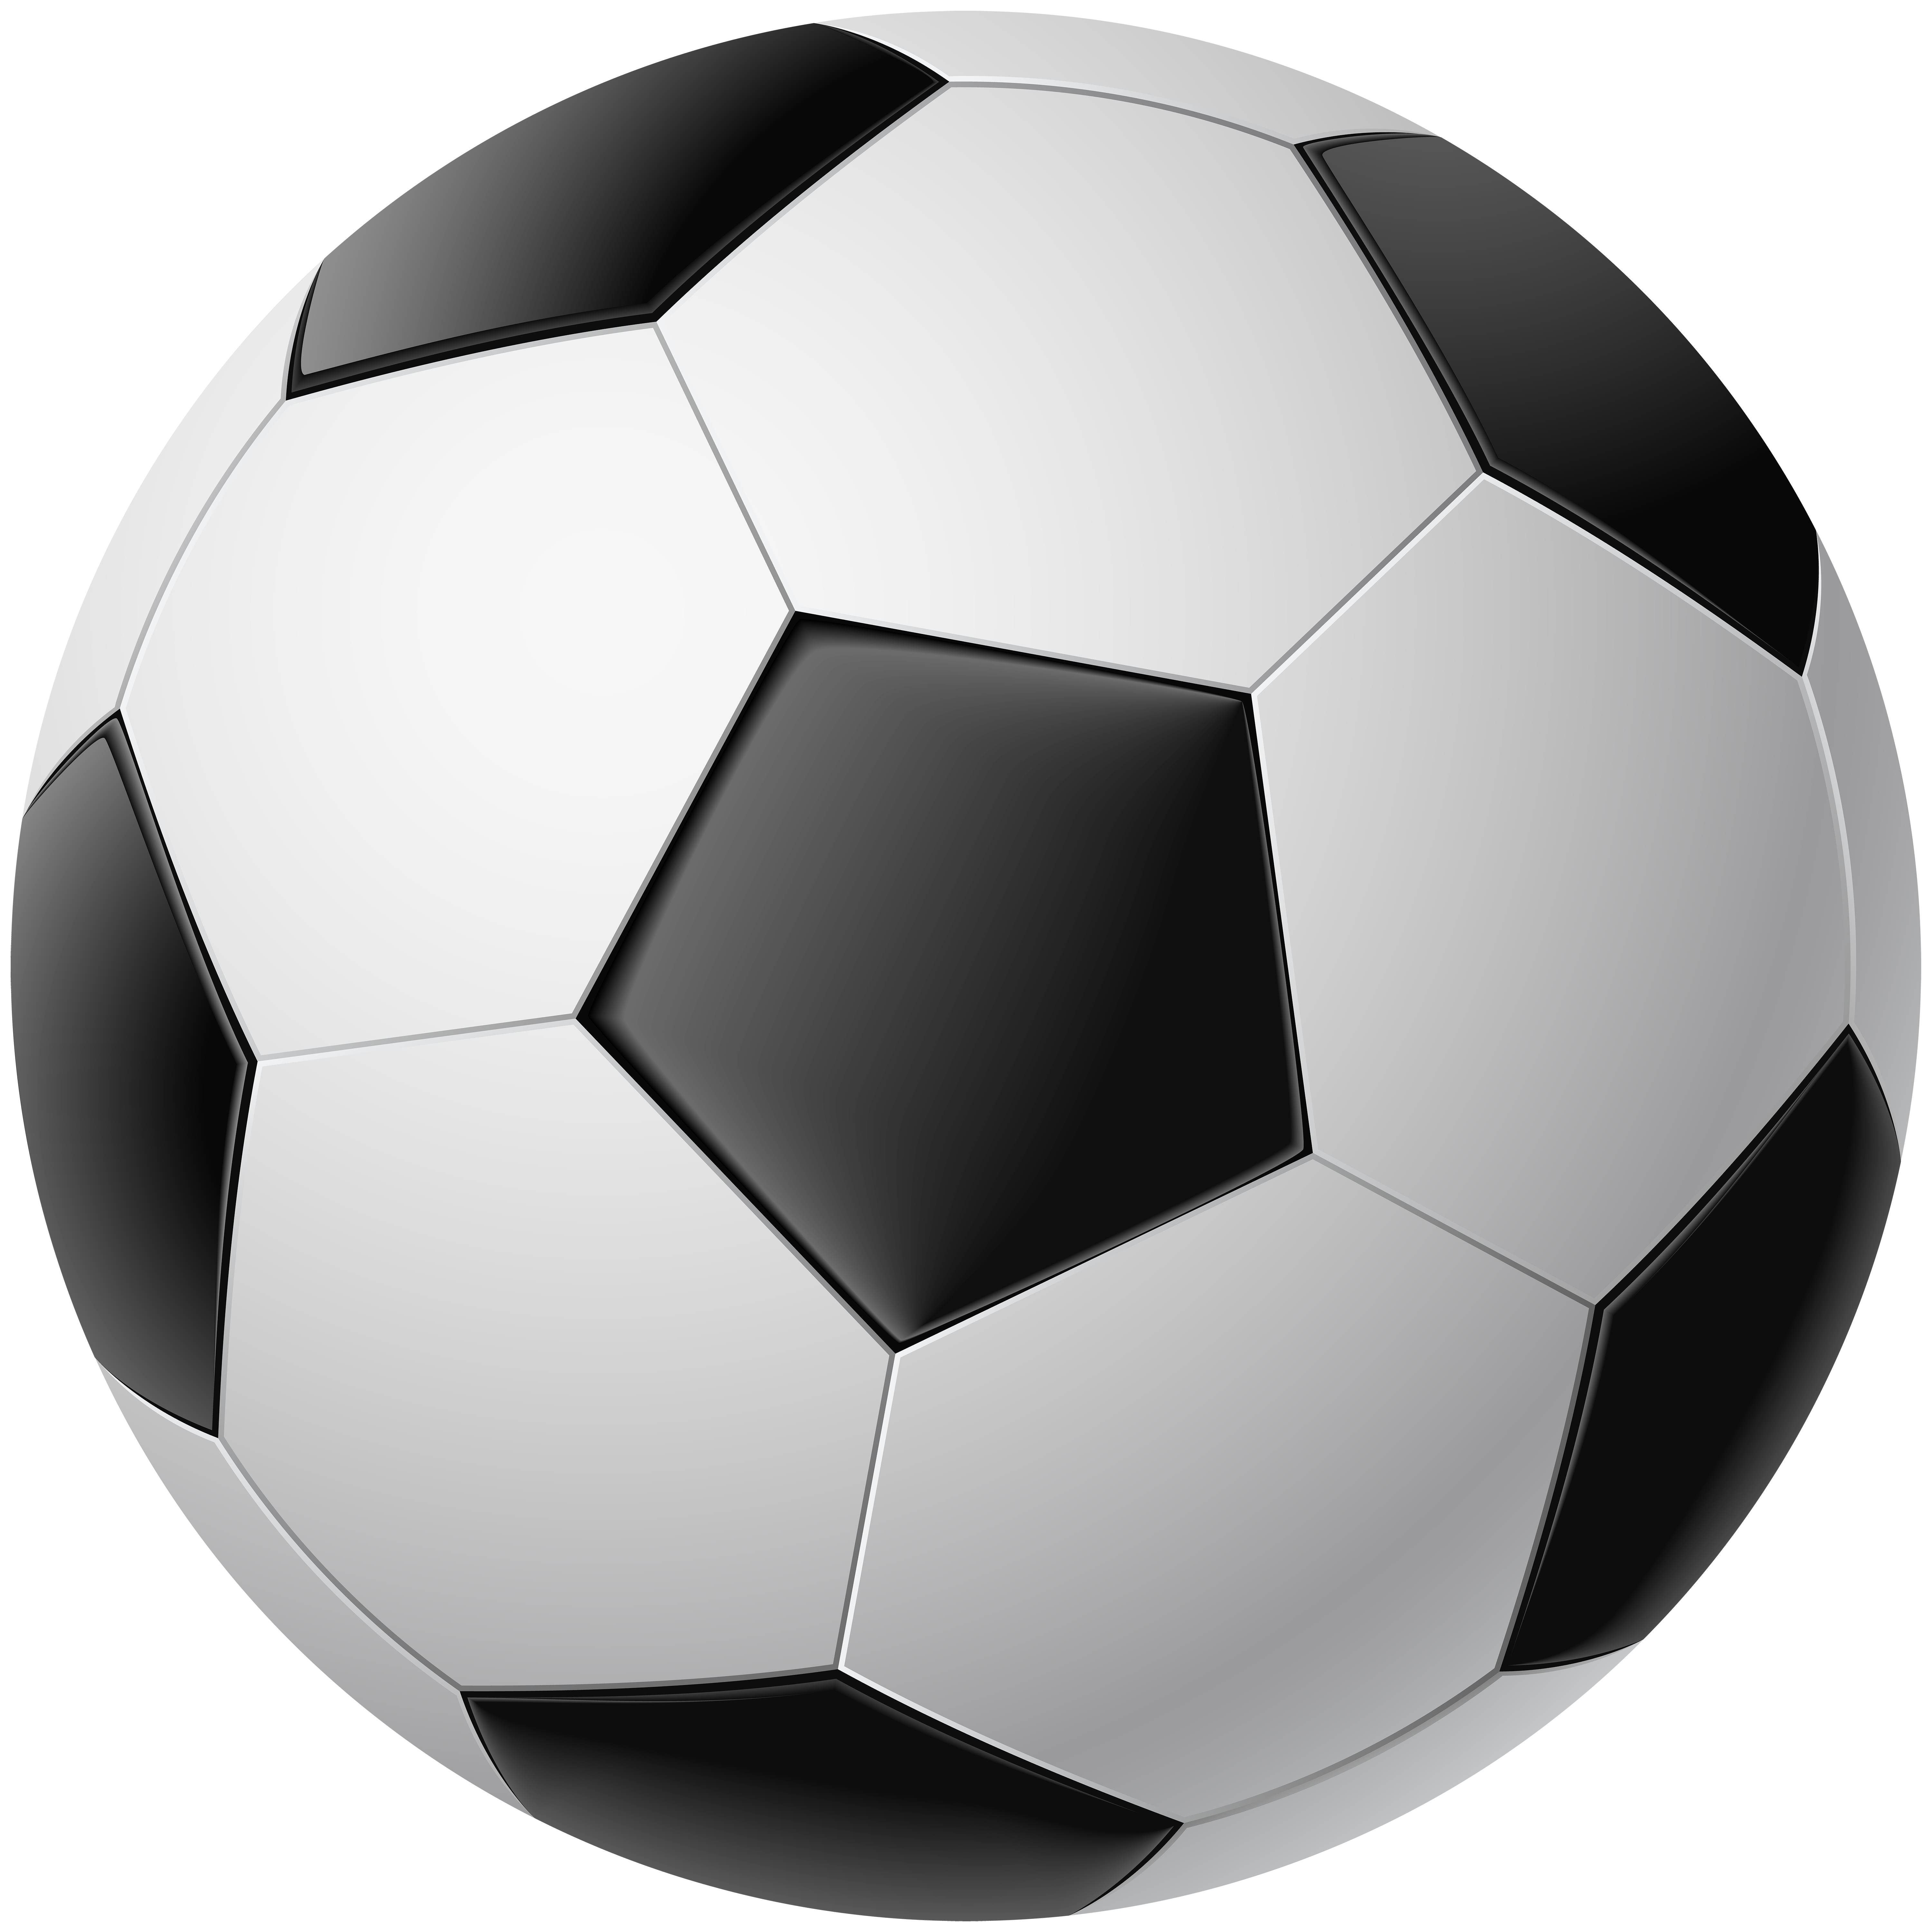 Soccer Ball PNG Clip Art Image.